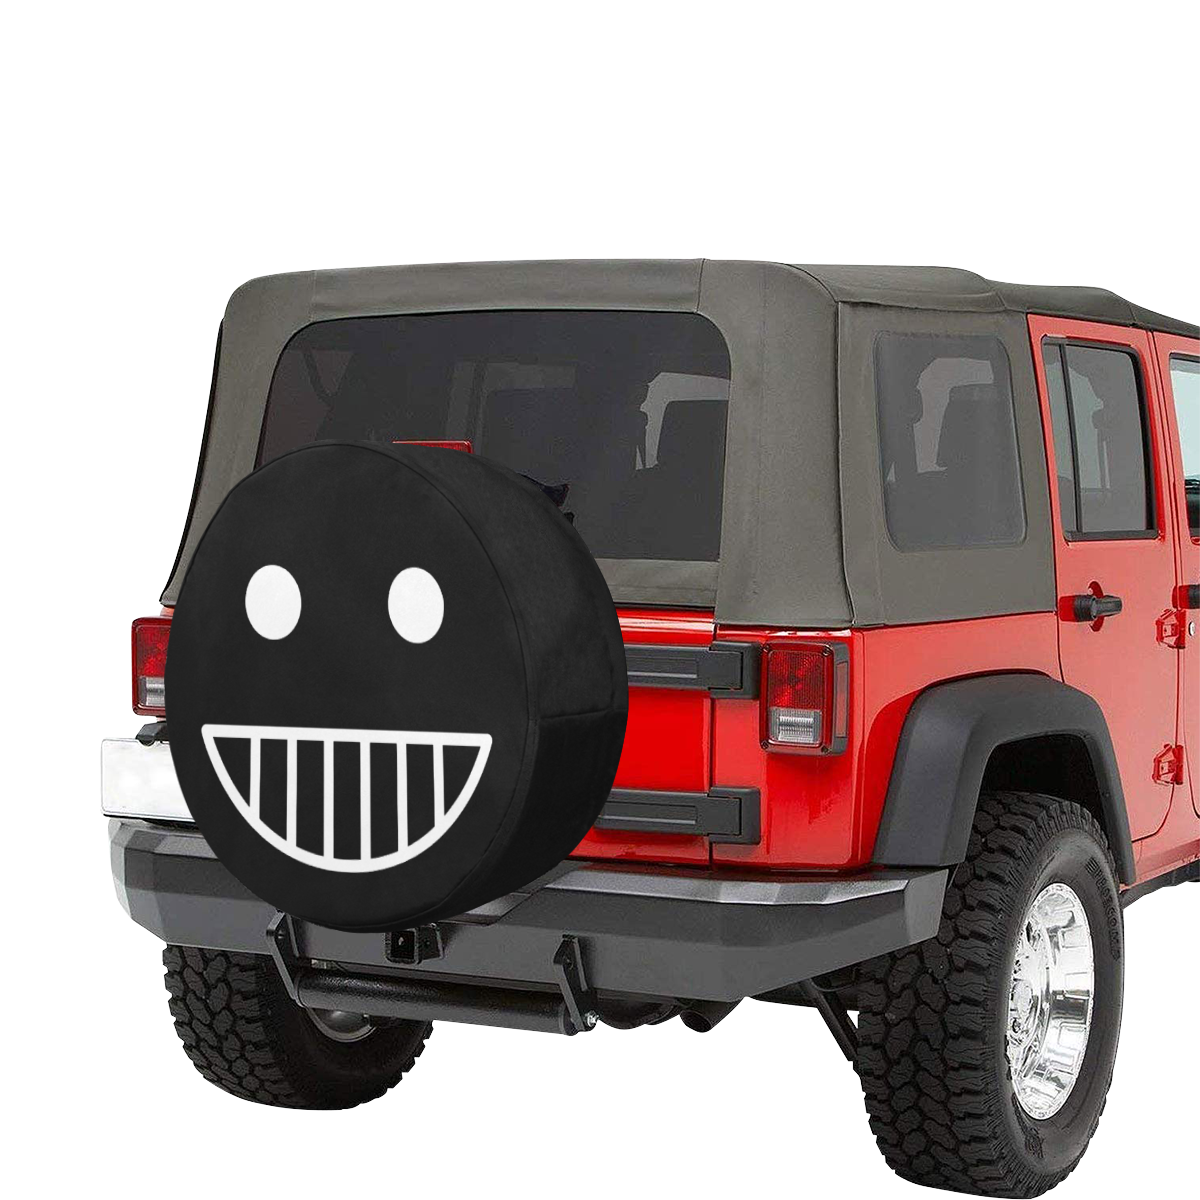 Silhouette Smiley Face Emoji 34 Inch Spare Tire Cover